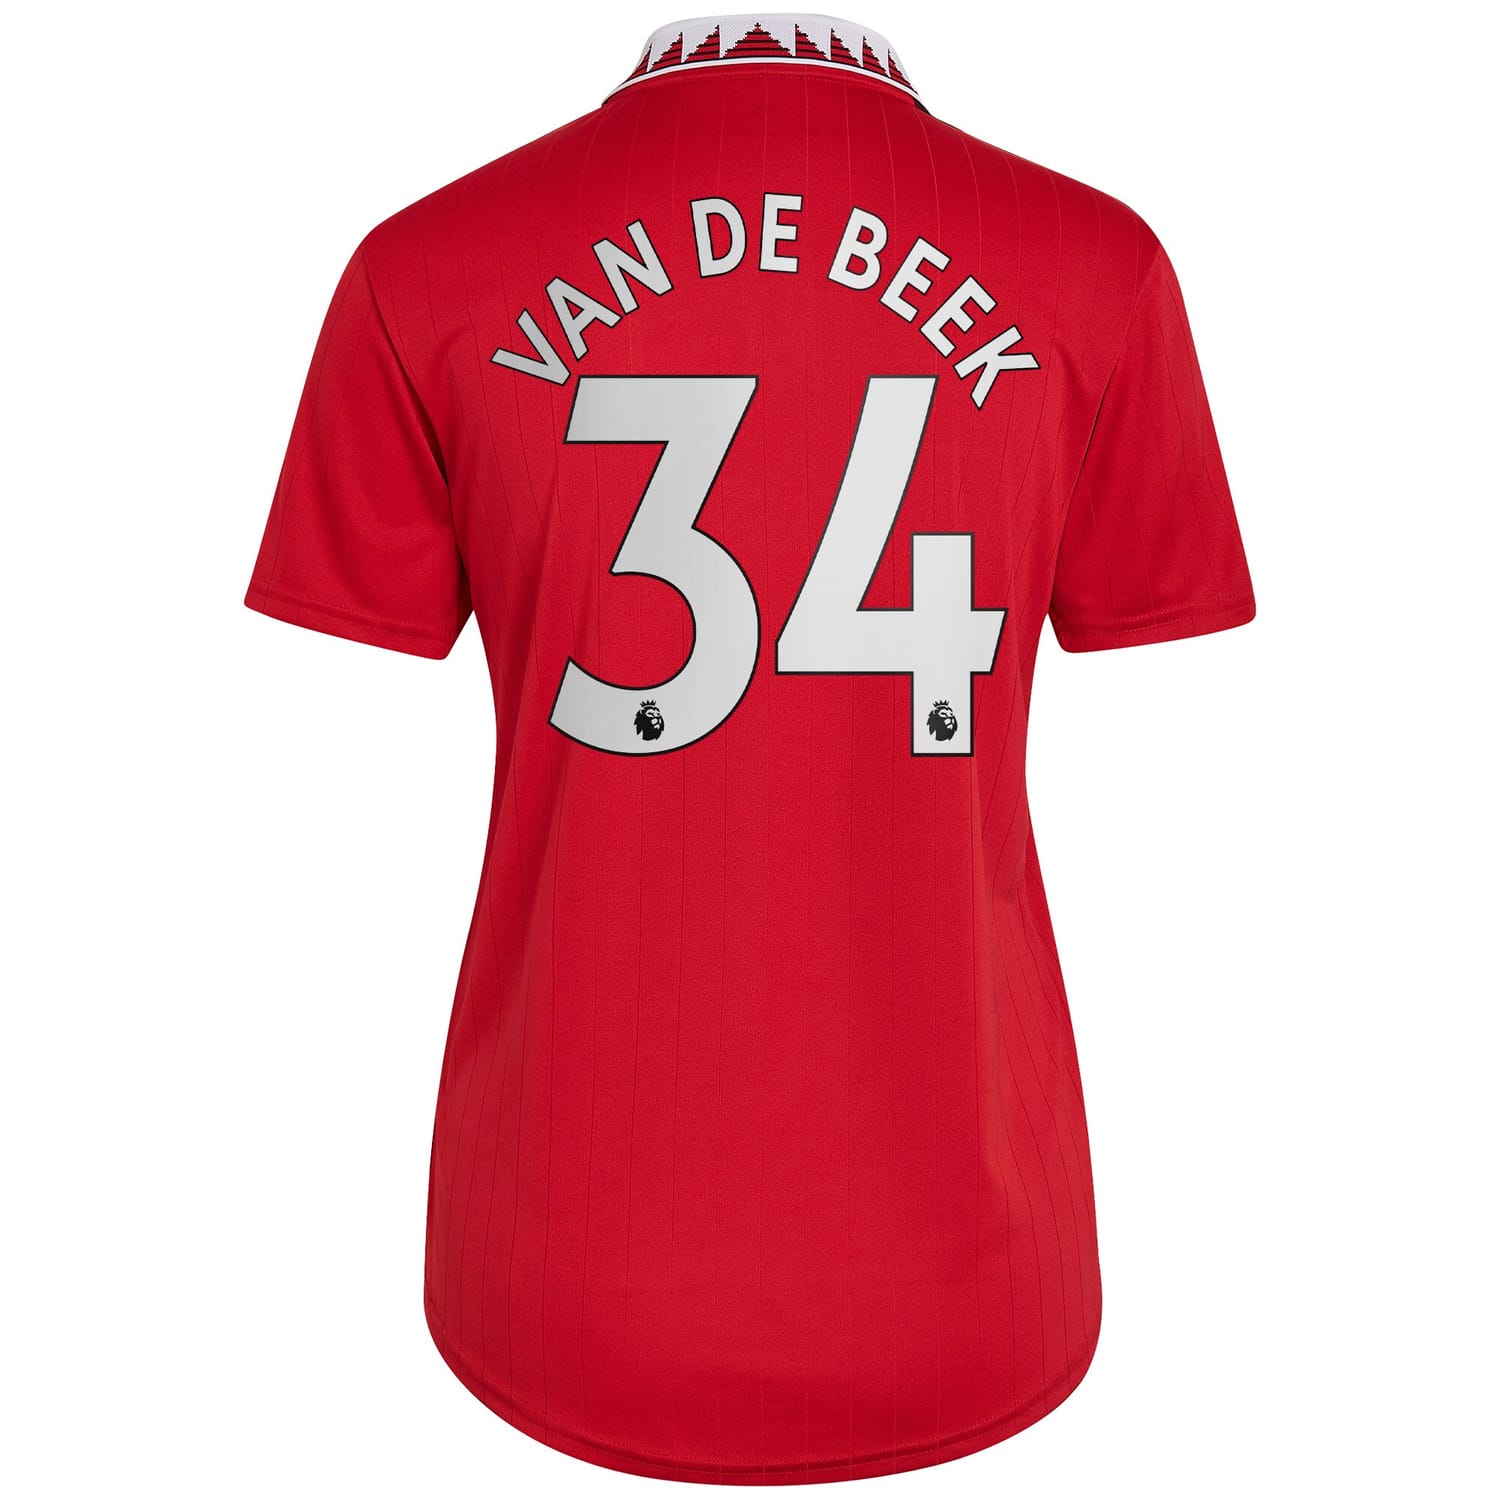 Premier League Manchester United Home Jersey Shirt 2022-23 player Donny Van De Beek 34 printing for Women